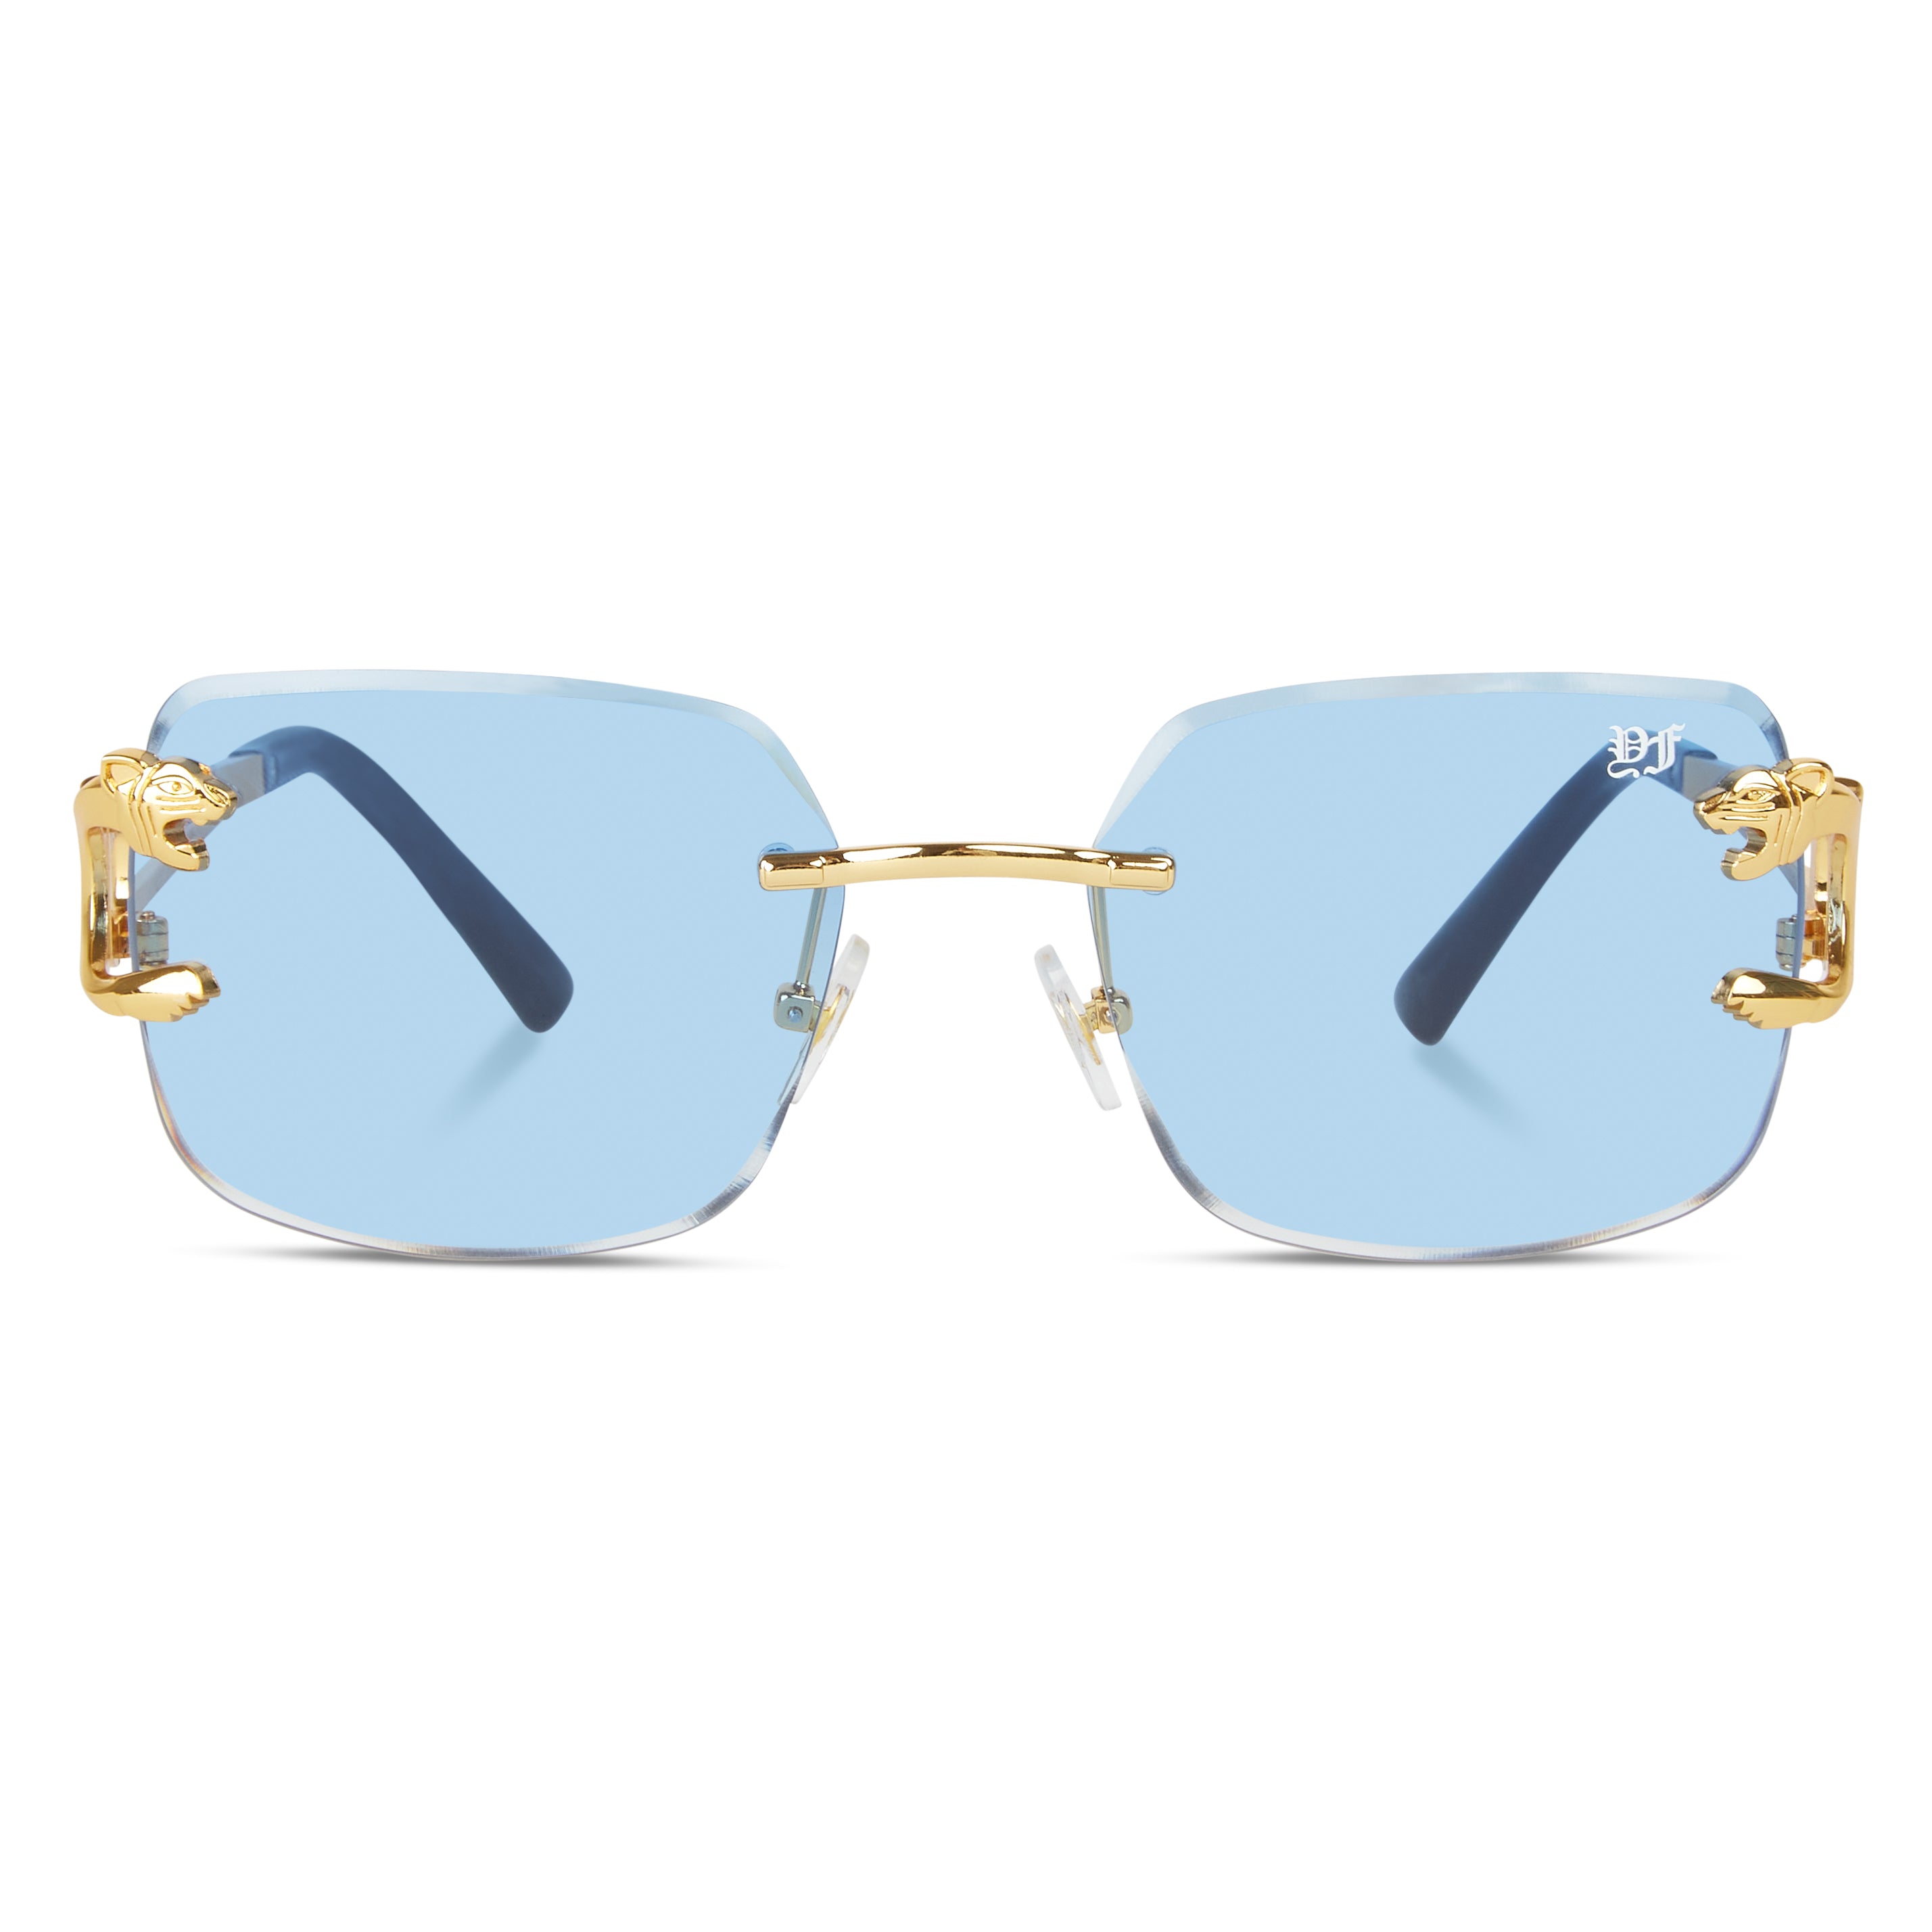 Square Gold frame sunglasses blue lense